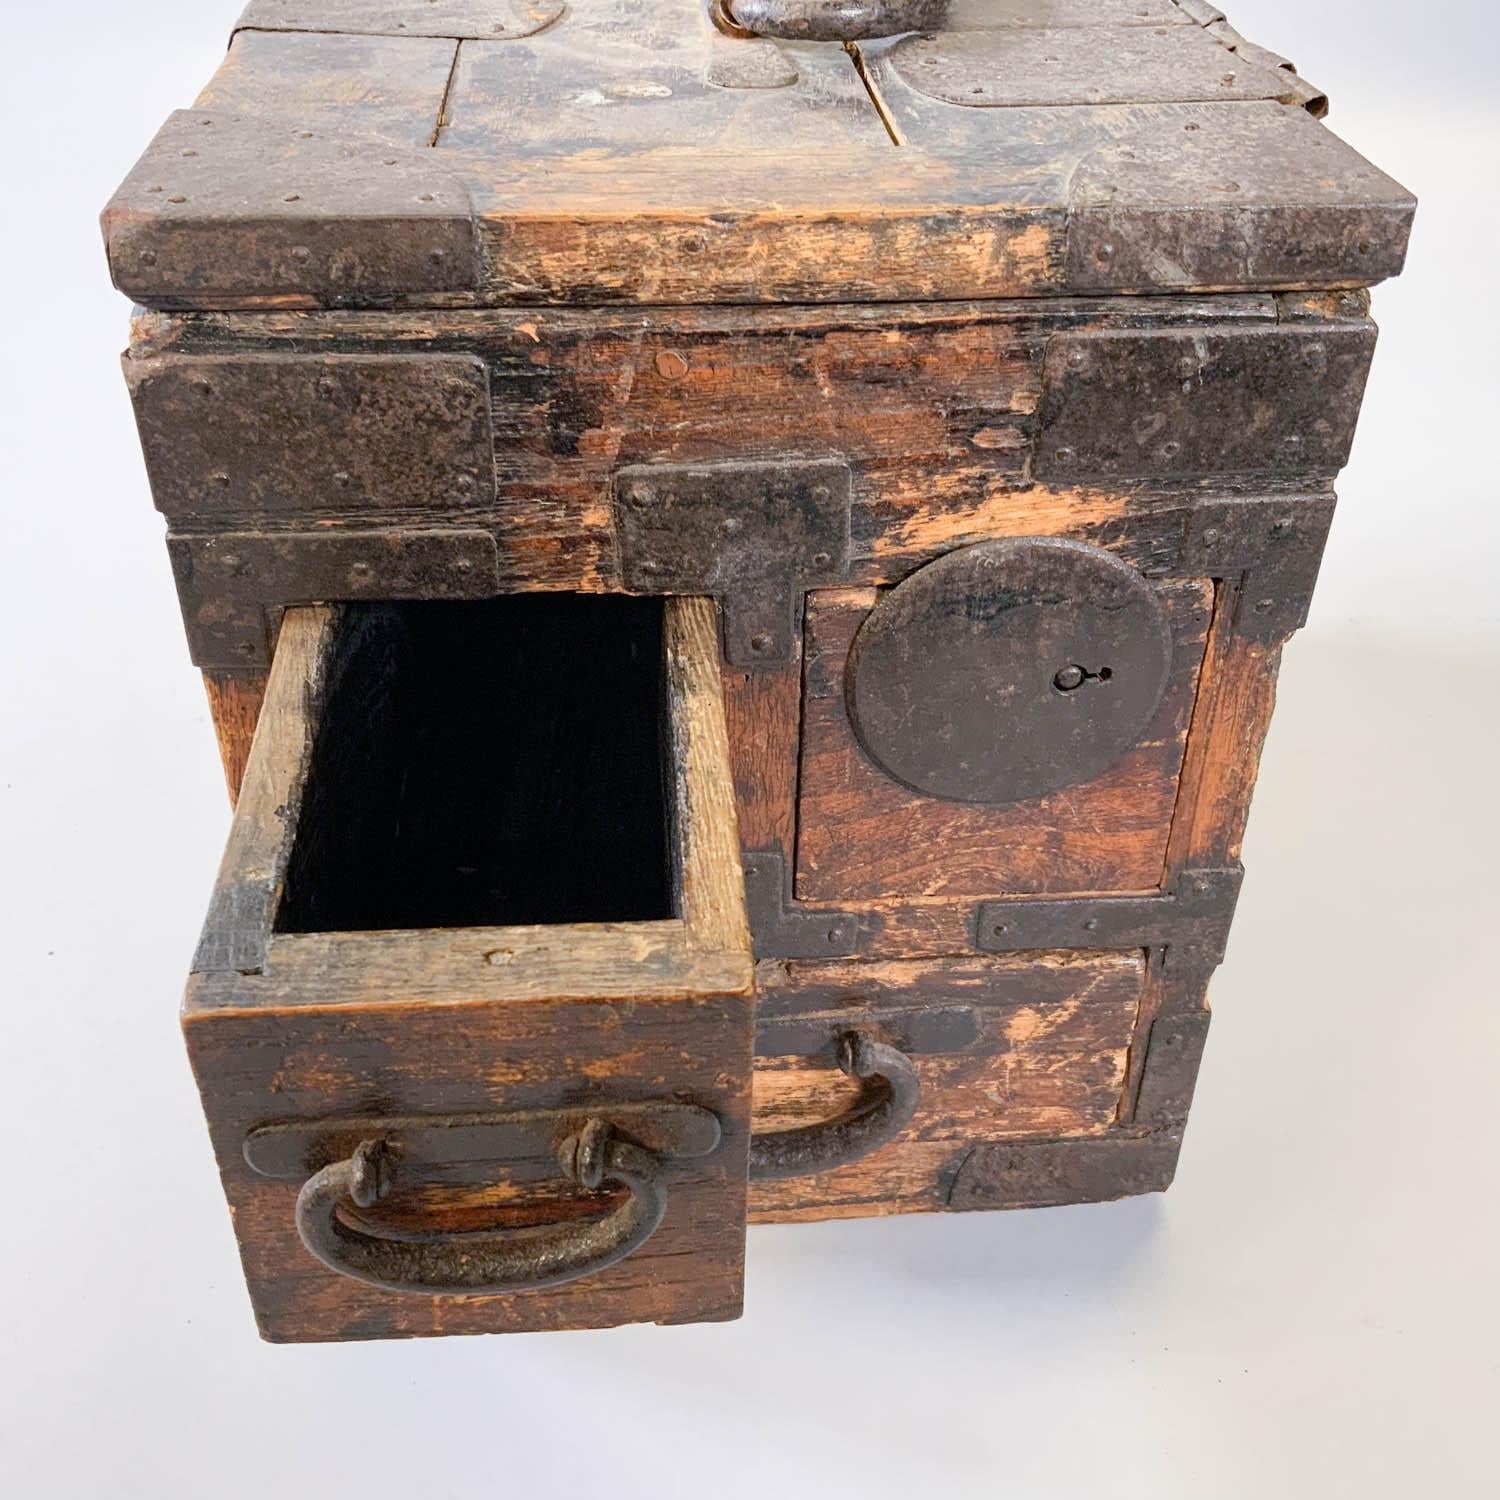 Antique Japanese Iron and Wood Tansu Suzuribako Box For Sale 1